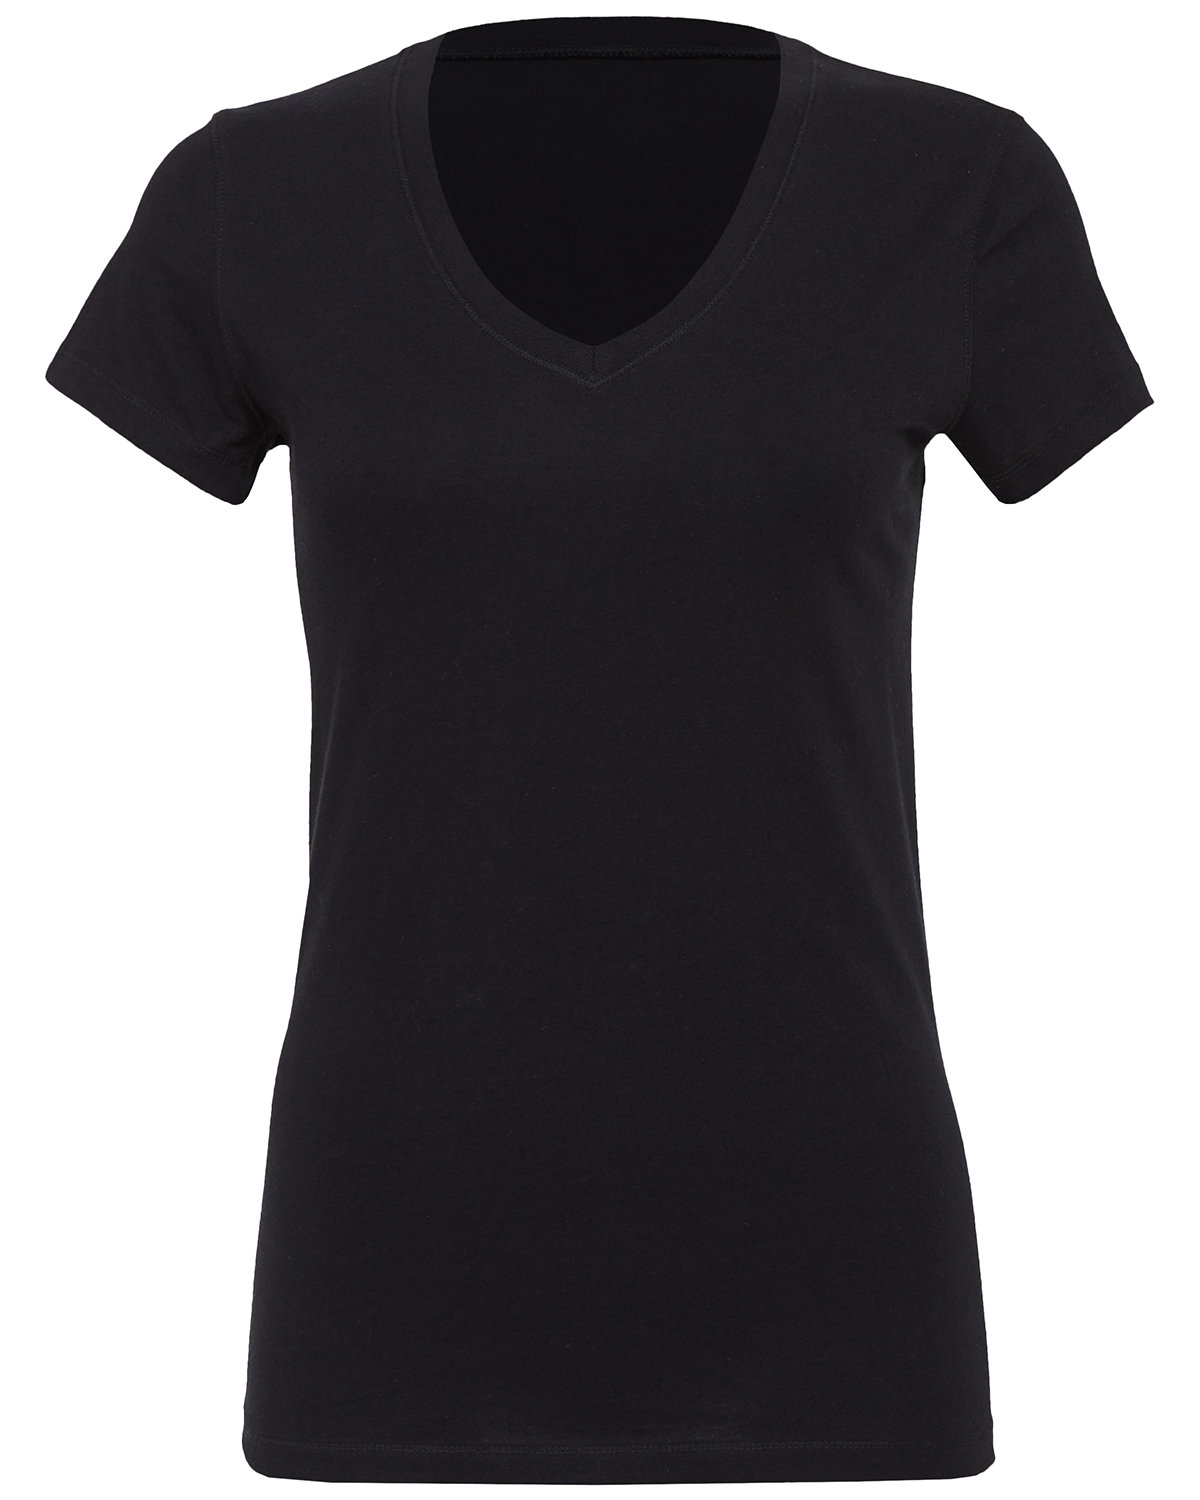 BELLA+CANVAS B6005: Ladies' Jersey Short-Sleeve V-Neck T-Shirt